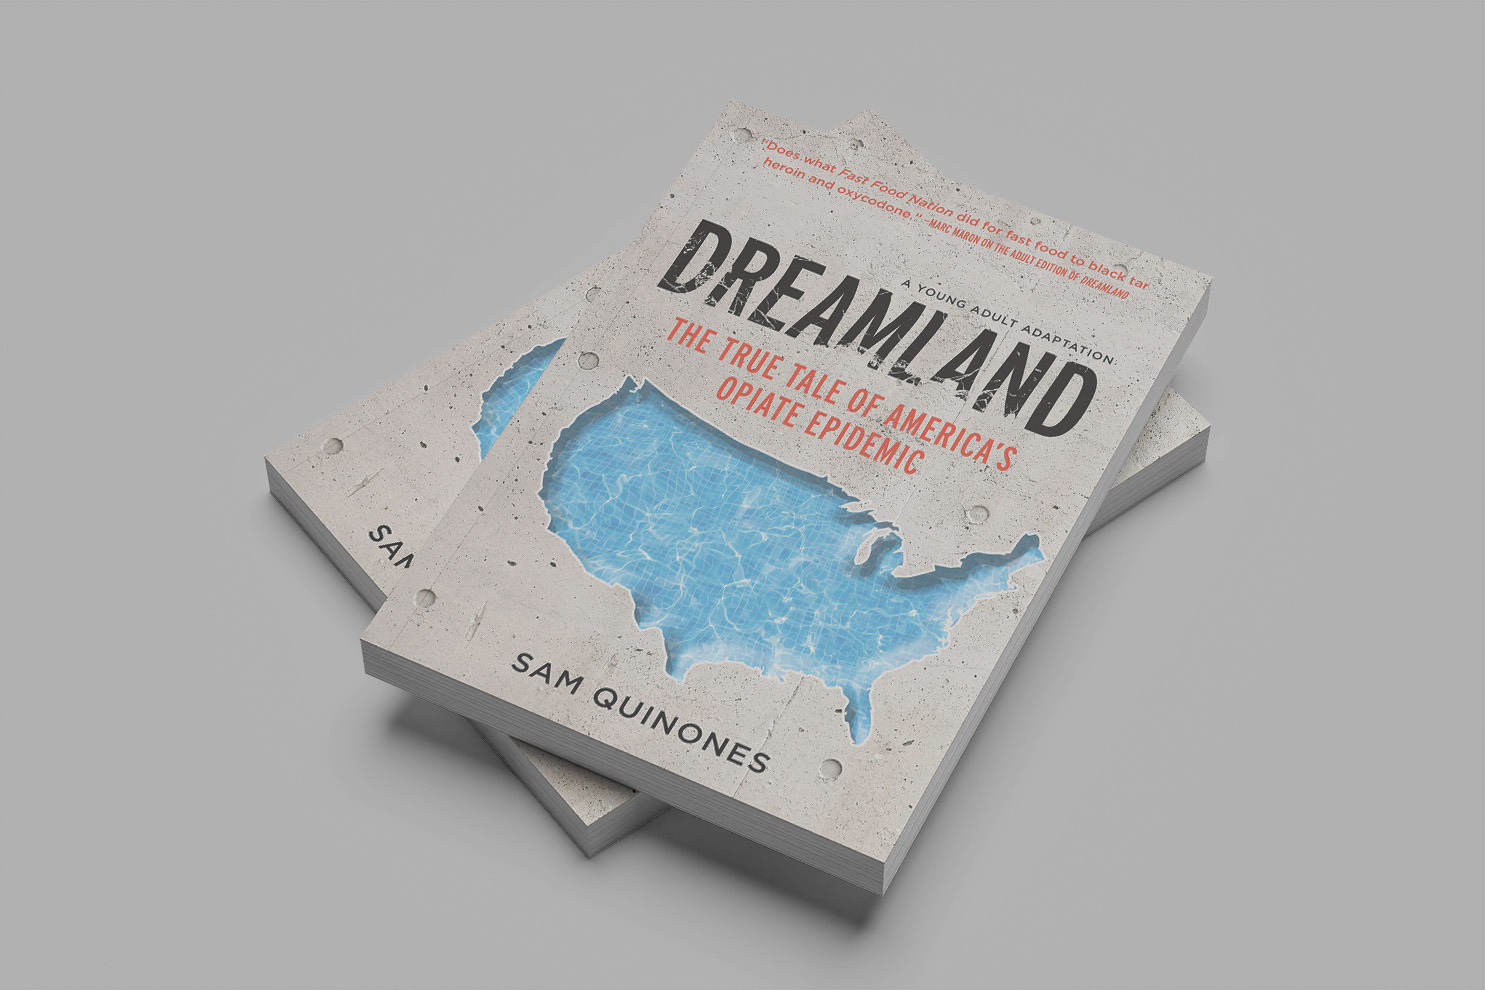 Dreamland by Sam Quinones book cover